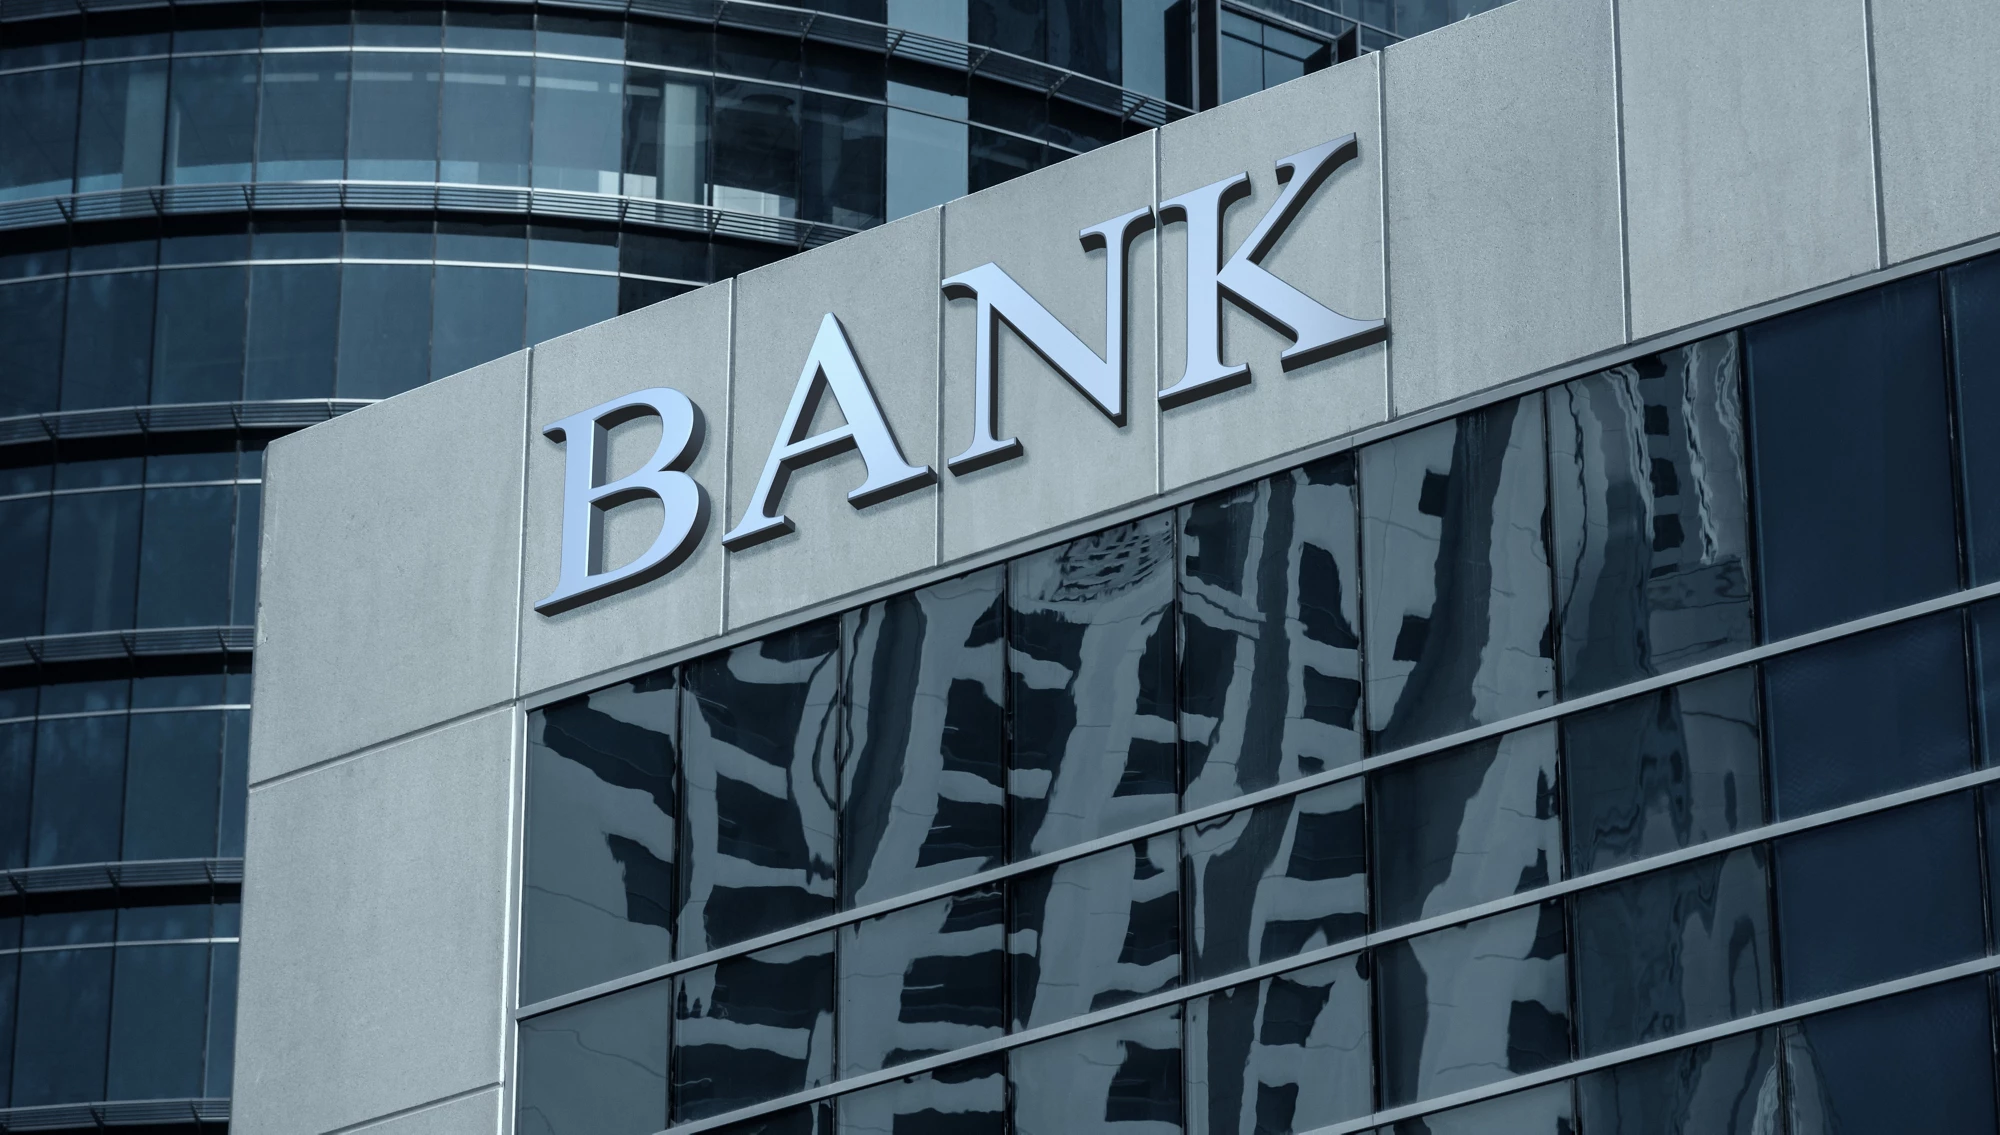 Bank building by Anton Violin/Shutterstock